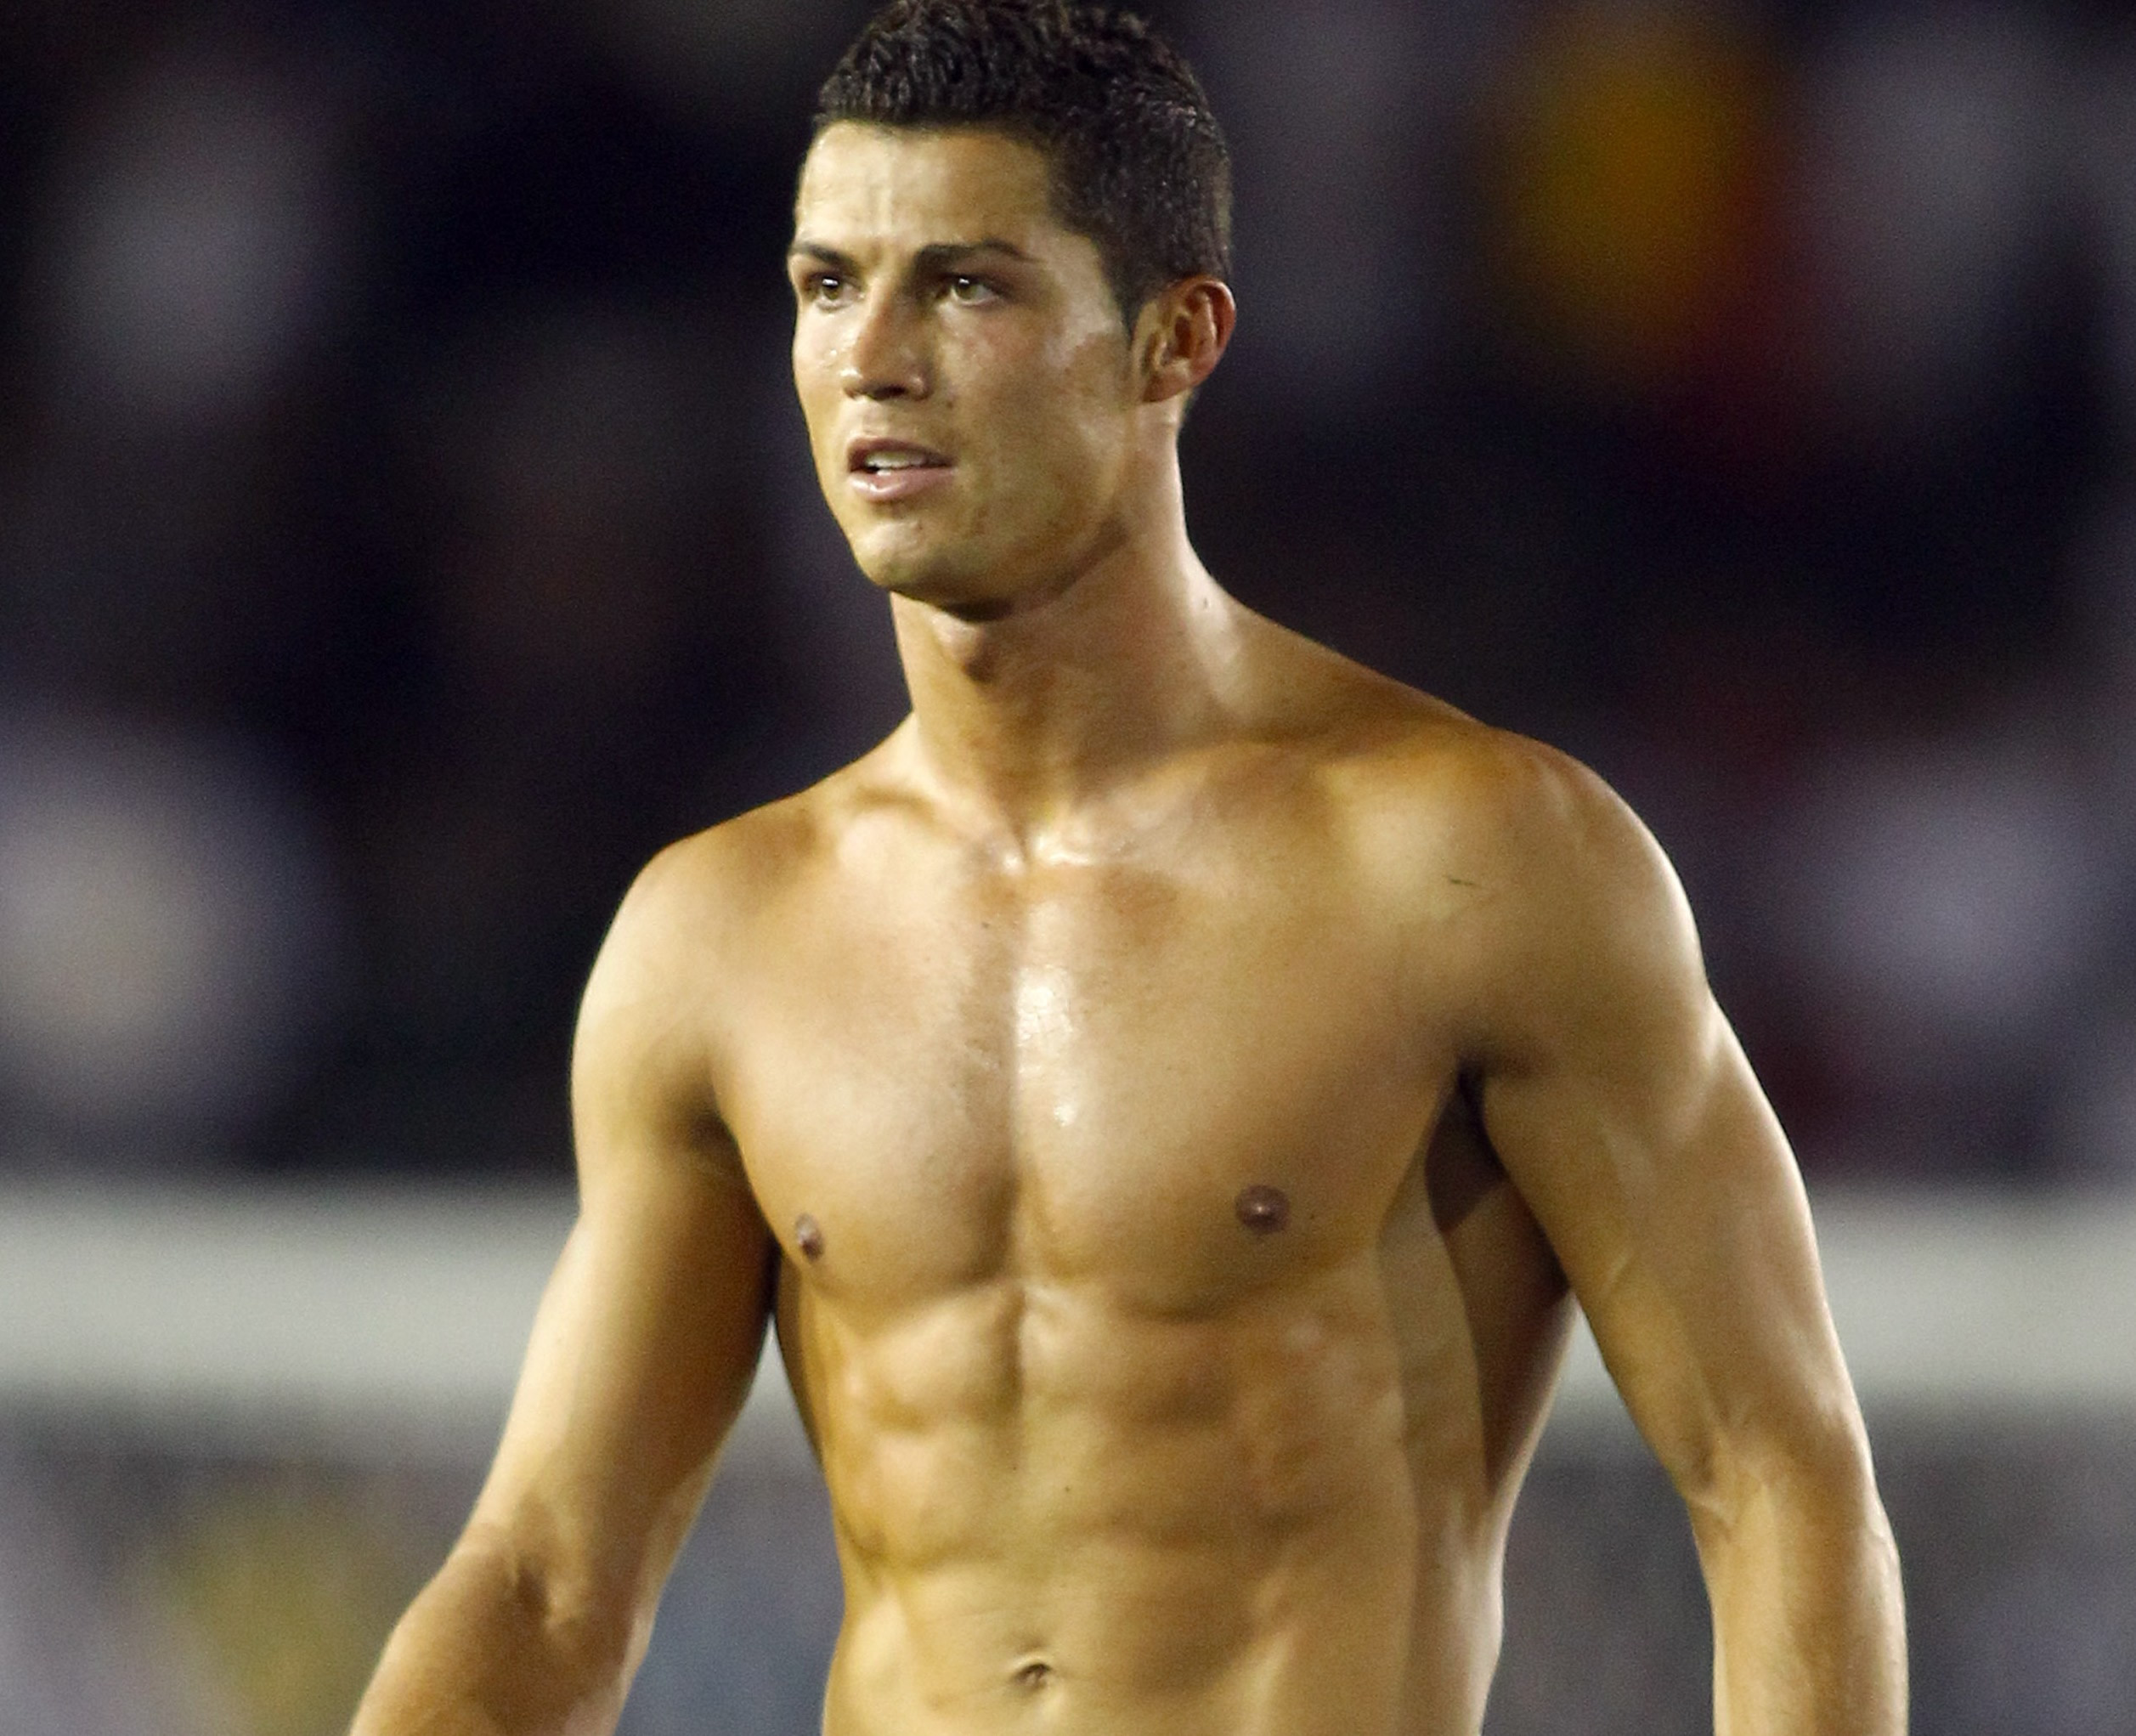 Cristiano Ronaldo shirtless body wallpaper   Cristiano Ronaldo